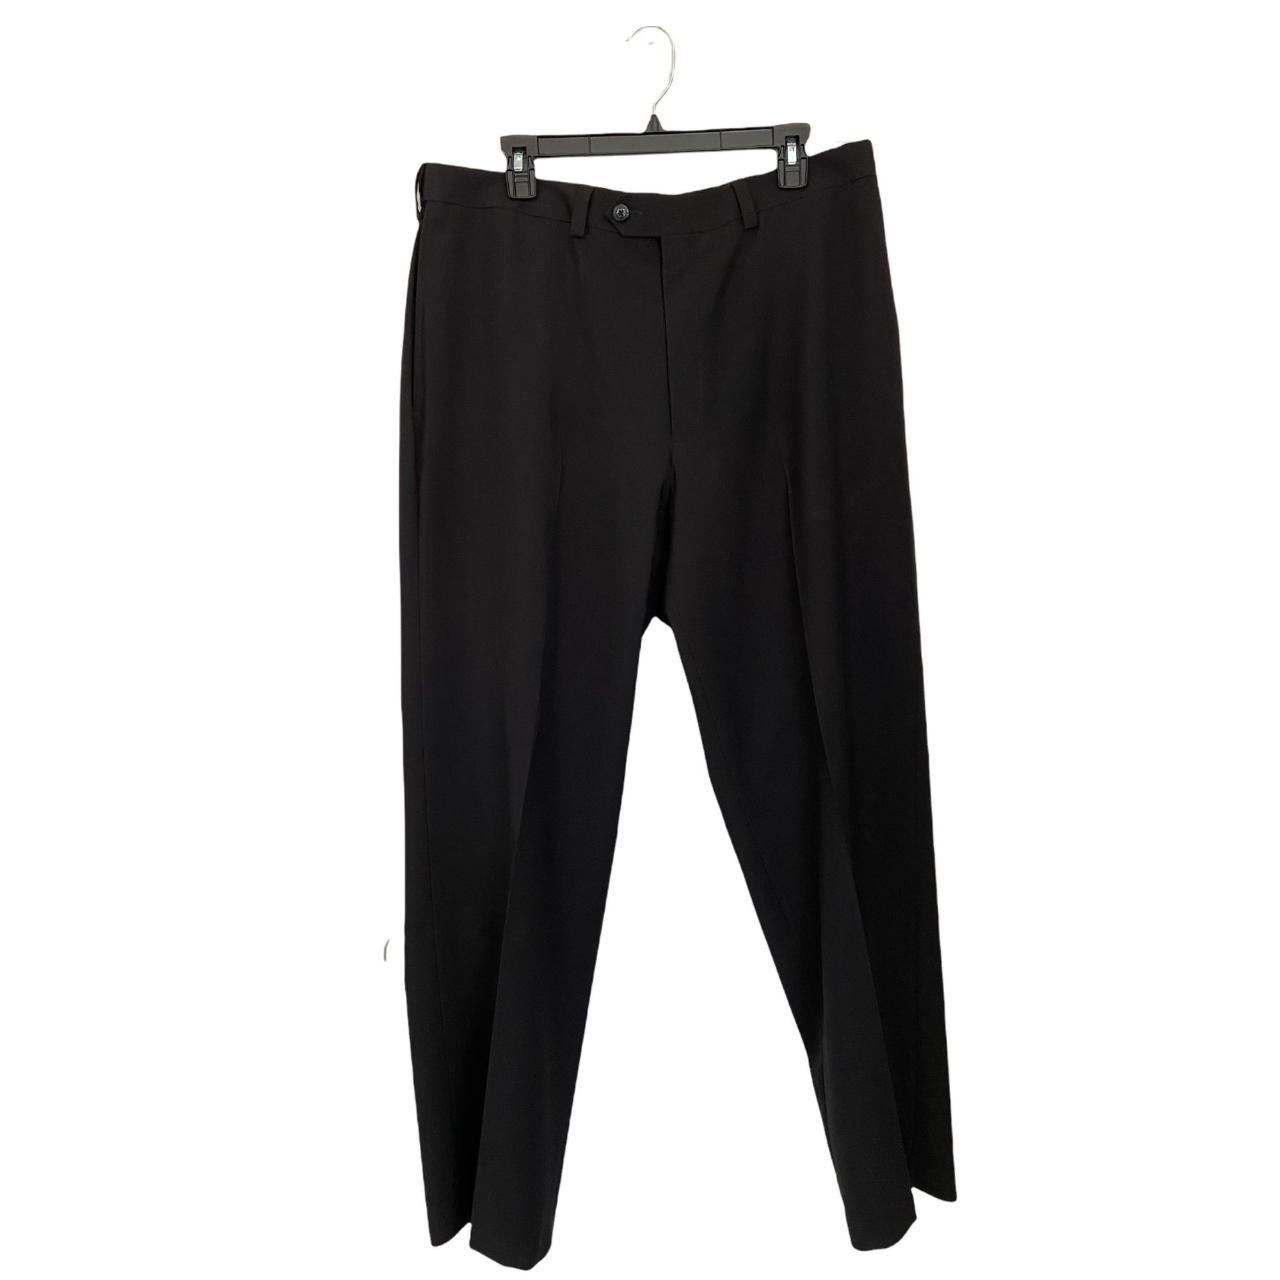 Haggar Black Dress Pants (Size 38 x 31) - Depop